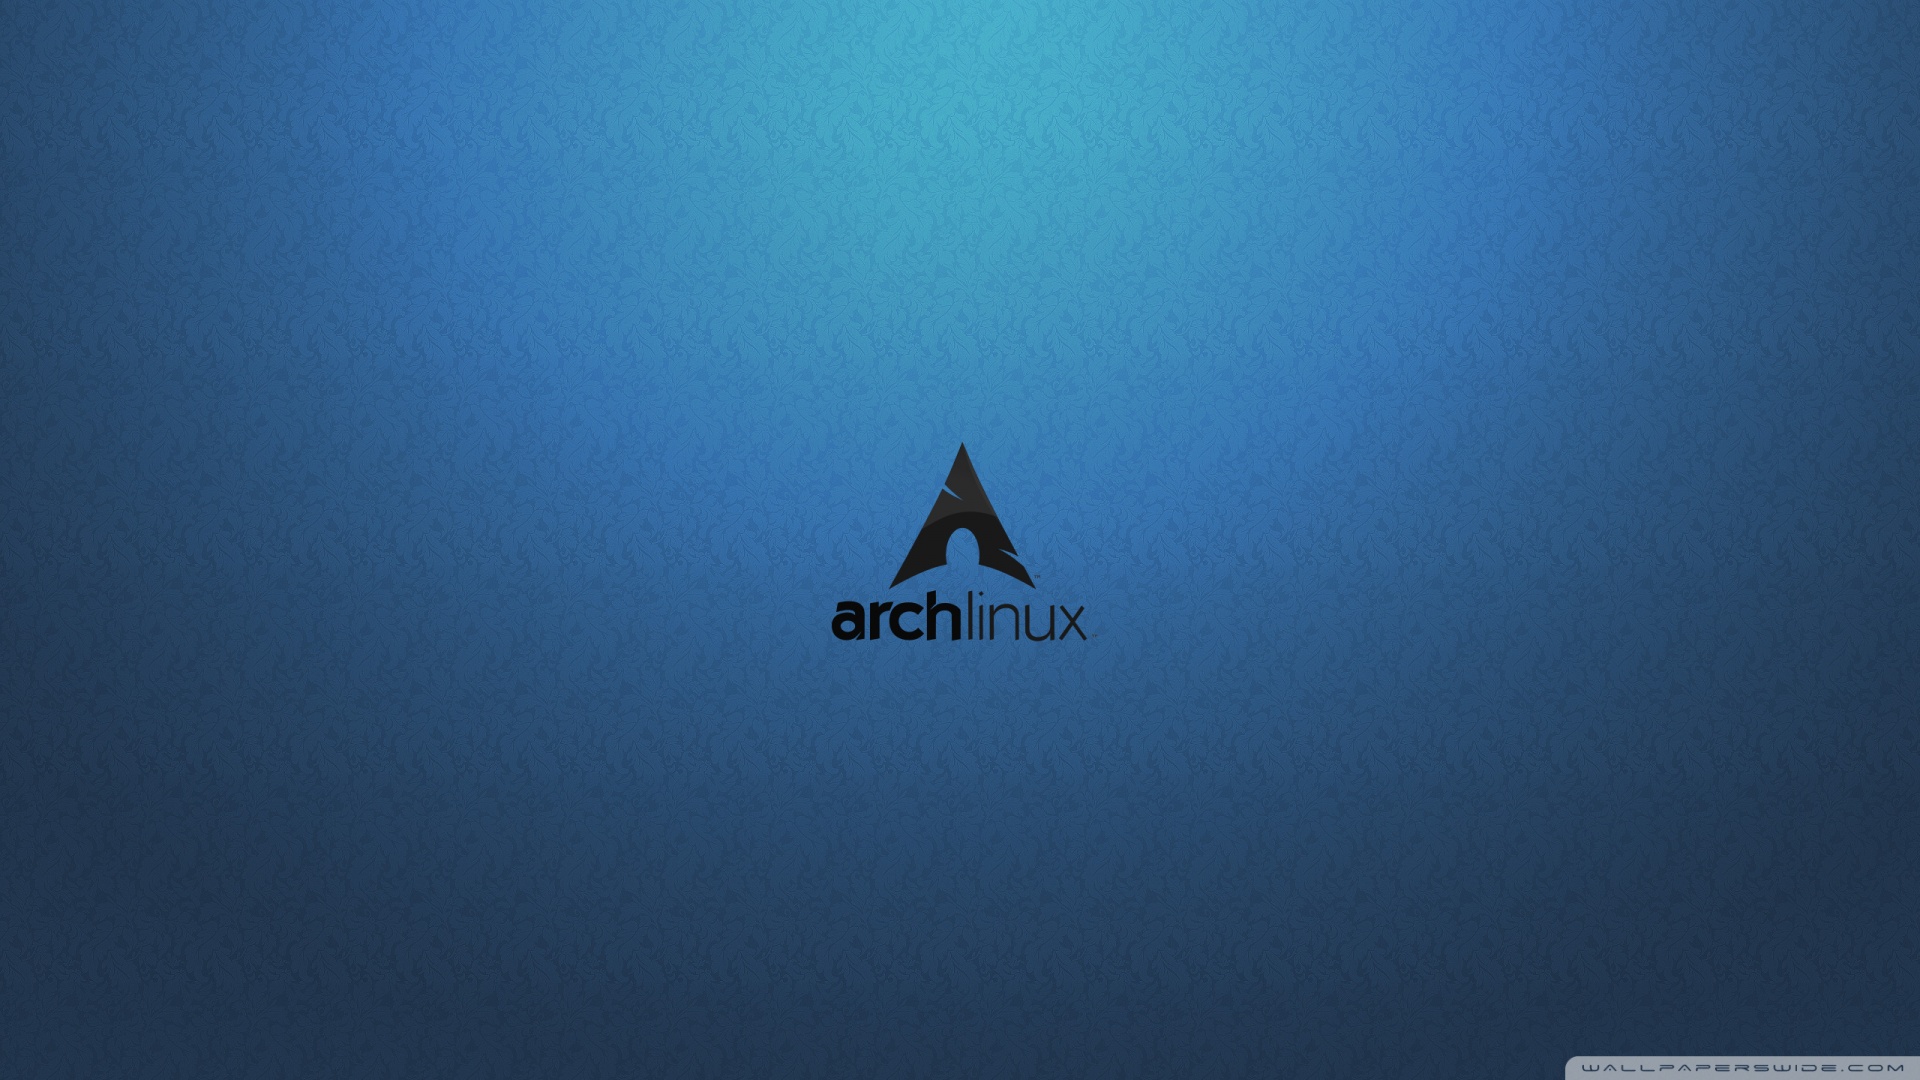 Archlinux Logo Ultra Hd Desktop Background Wallpaper For 4k Uhd Tv Multi Display Dual Monitor Tablet Smartphone